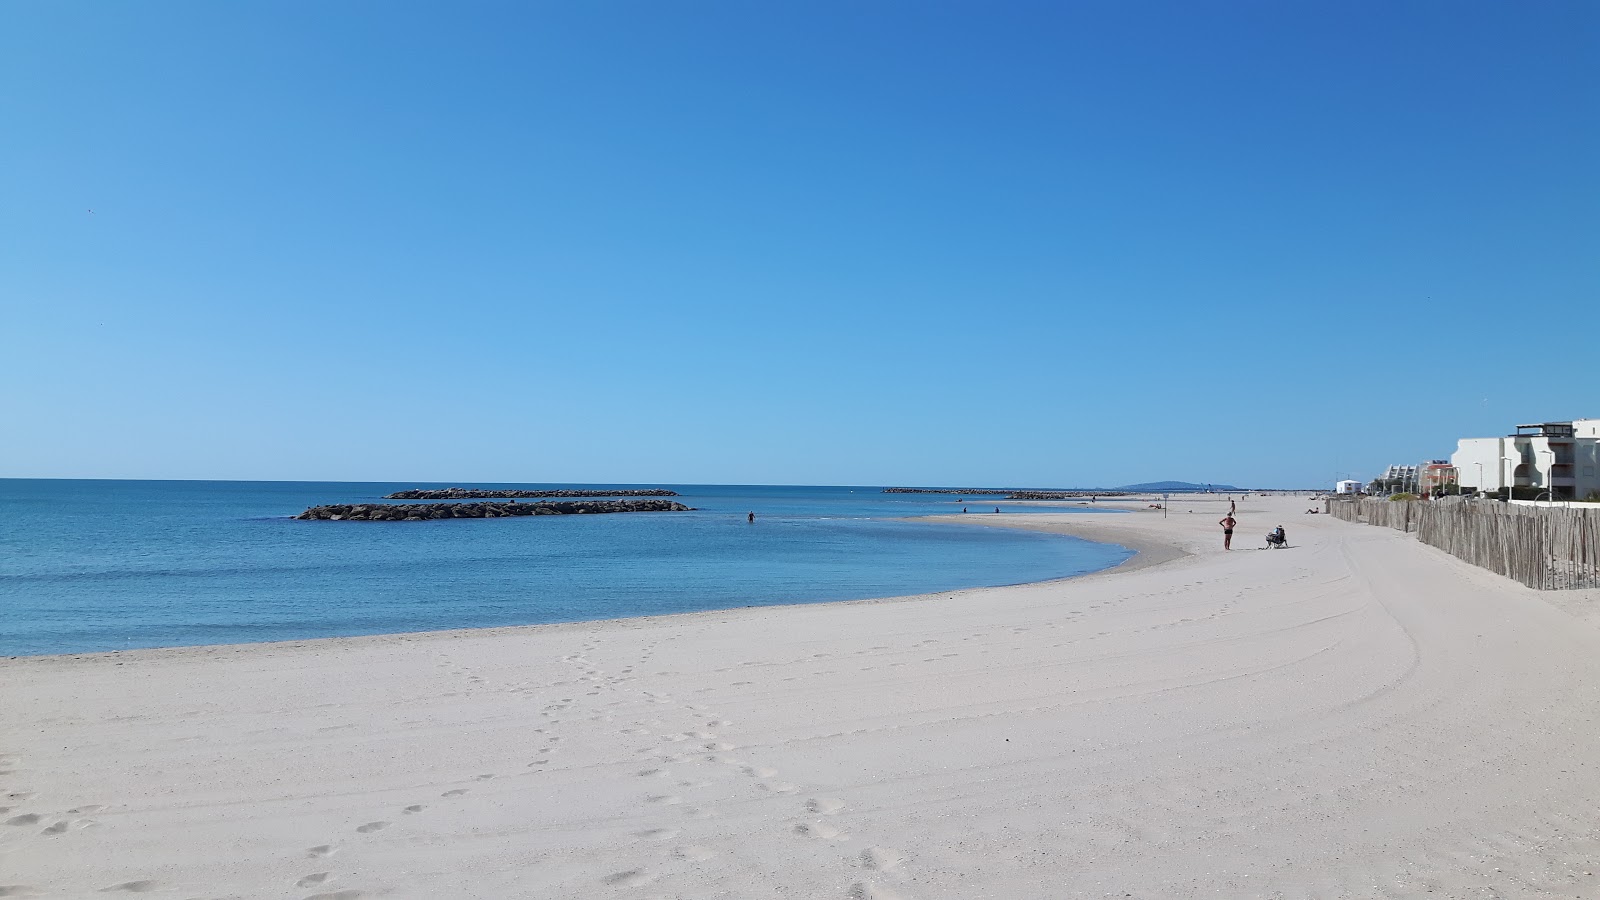 Foto di Palavas beach con una superficie del sabbia luminosa